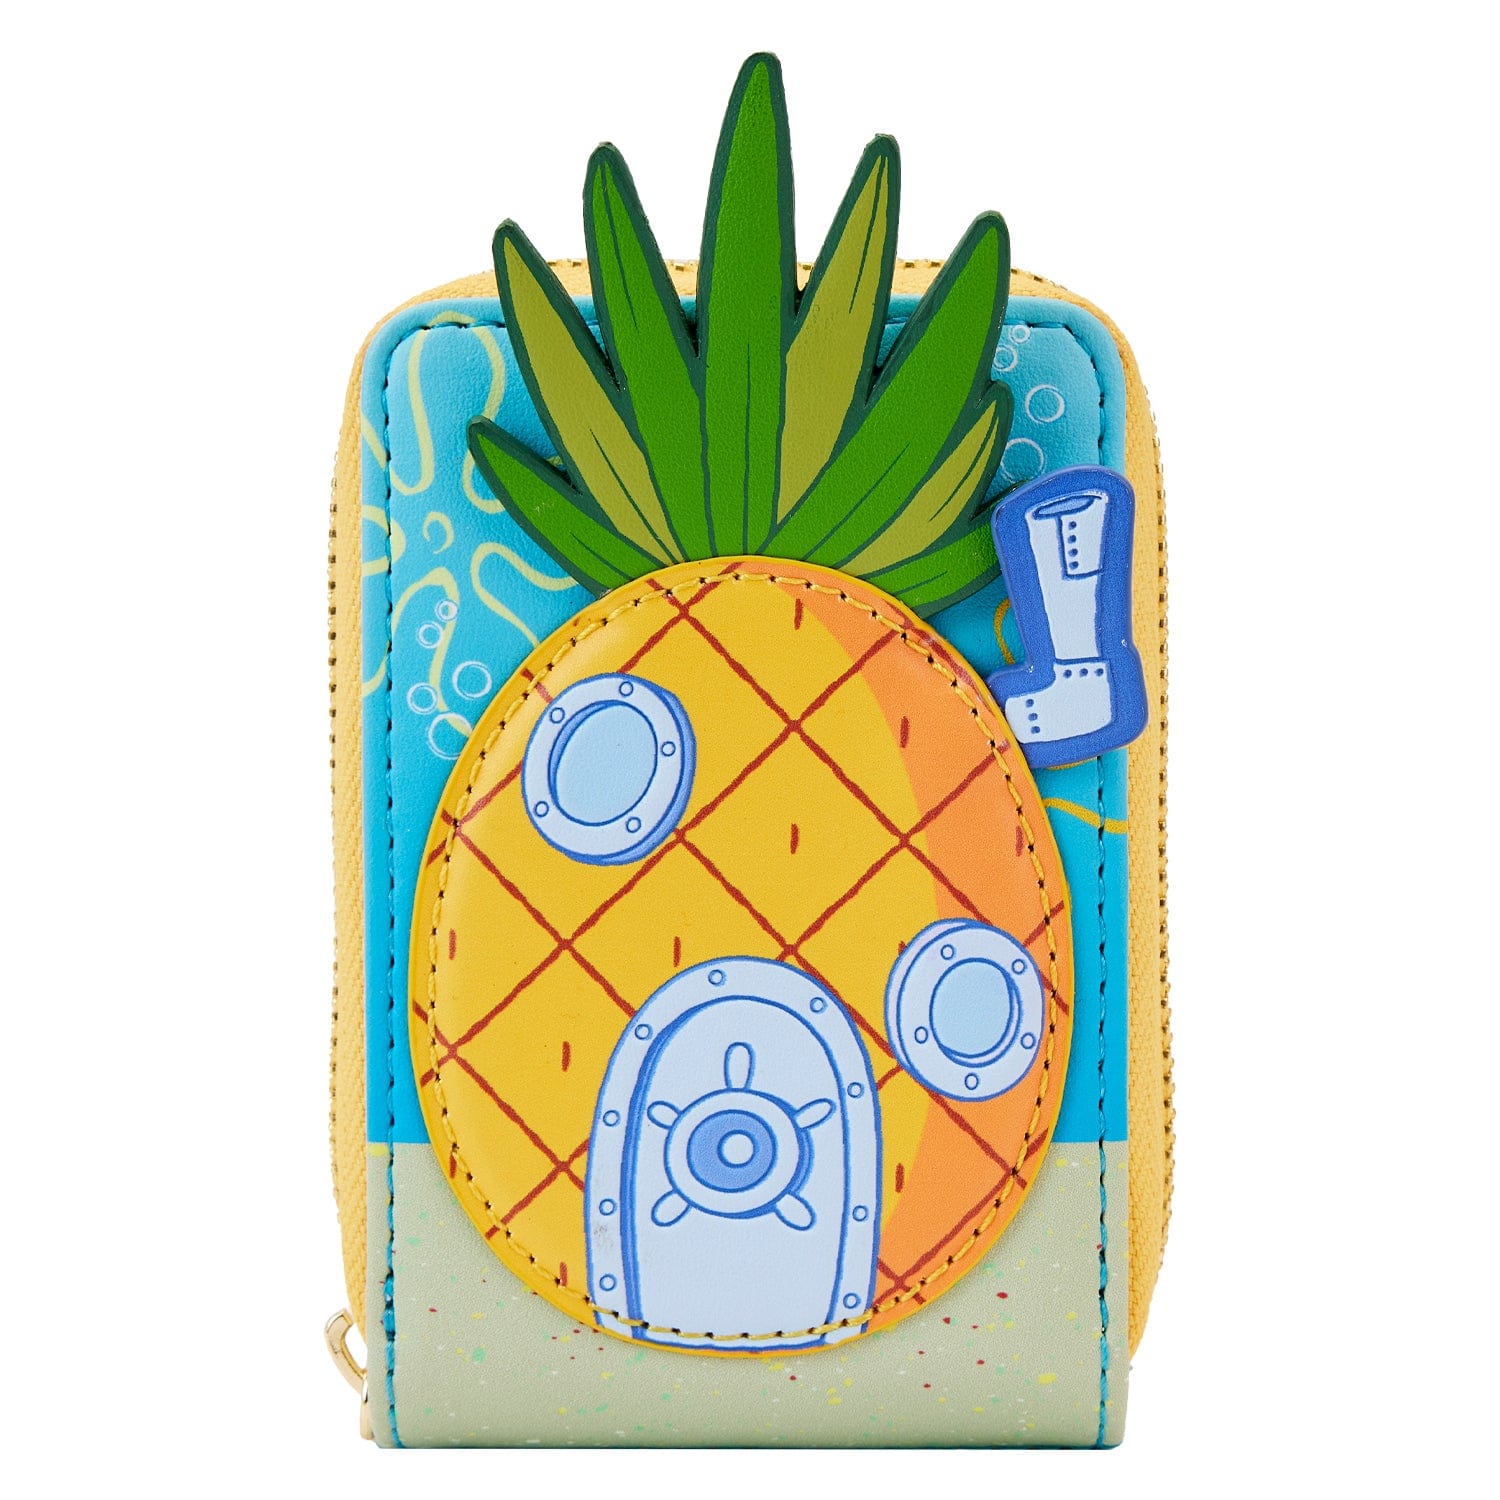 Spongebob SquarePants Pineapple House Accordion Wallet